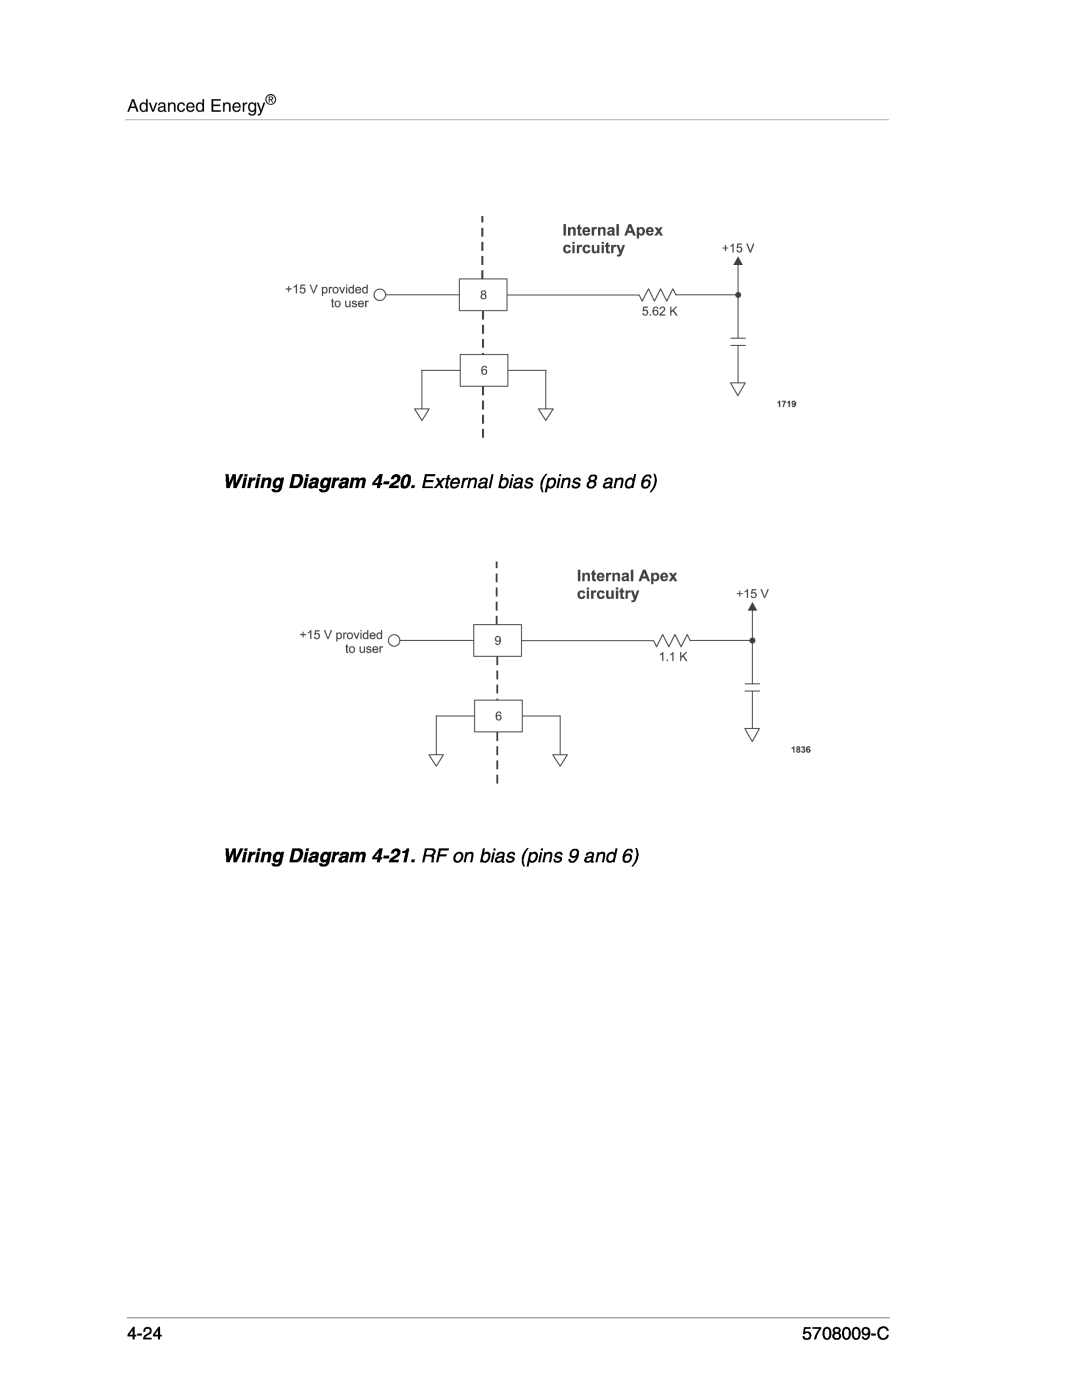 Apex Digital 5708009-C Wiring Diagram 4-20. External bias pins 8 and, Wiring Diagram 4-21. RF on bias pins 9 and, 4-24 